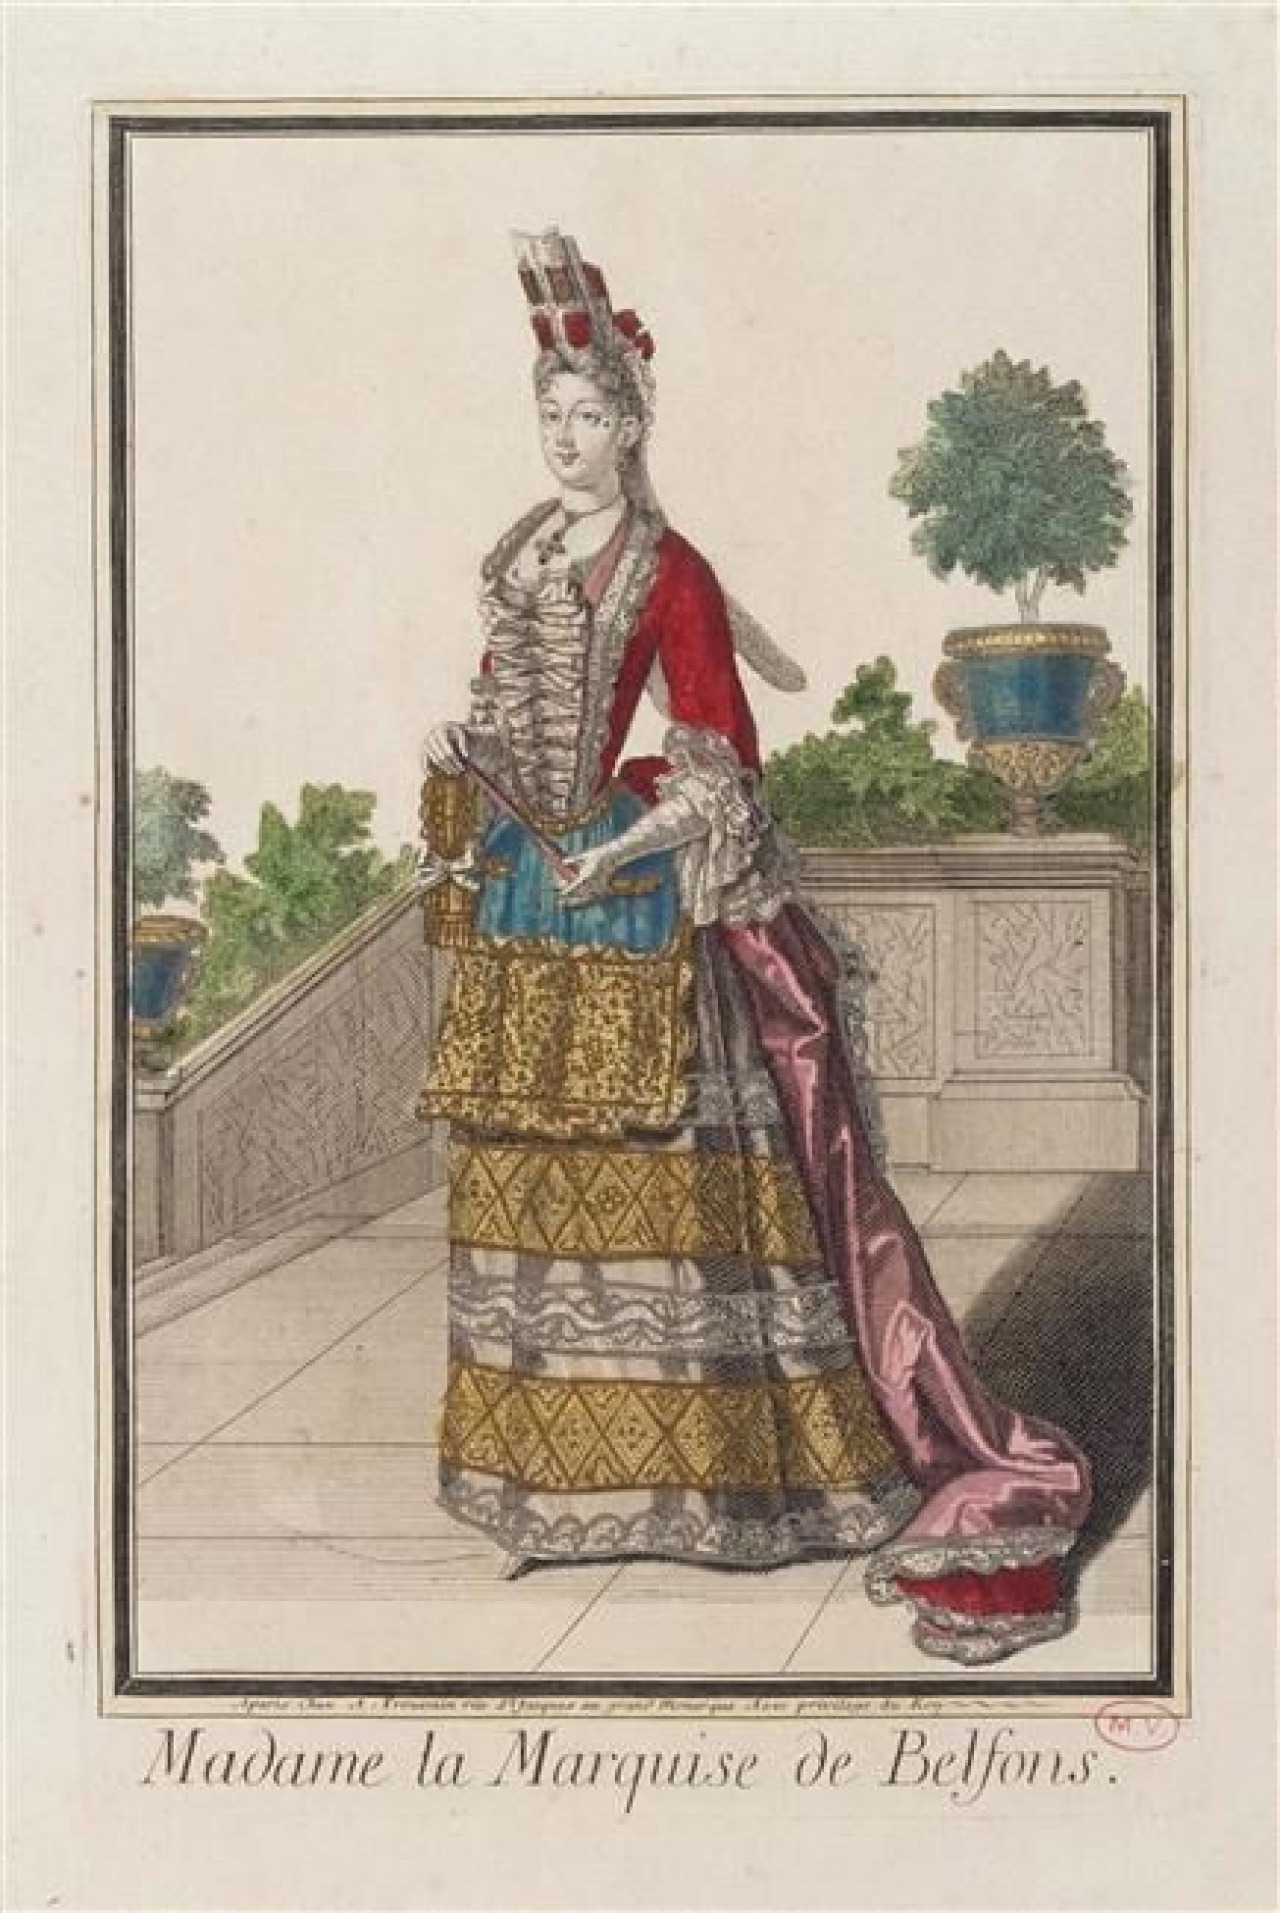 1690s fashion